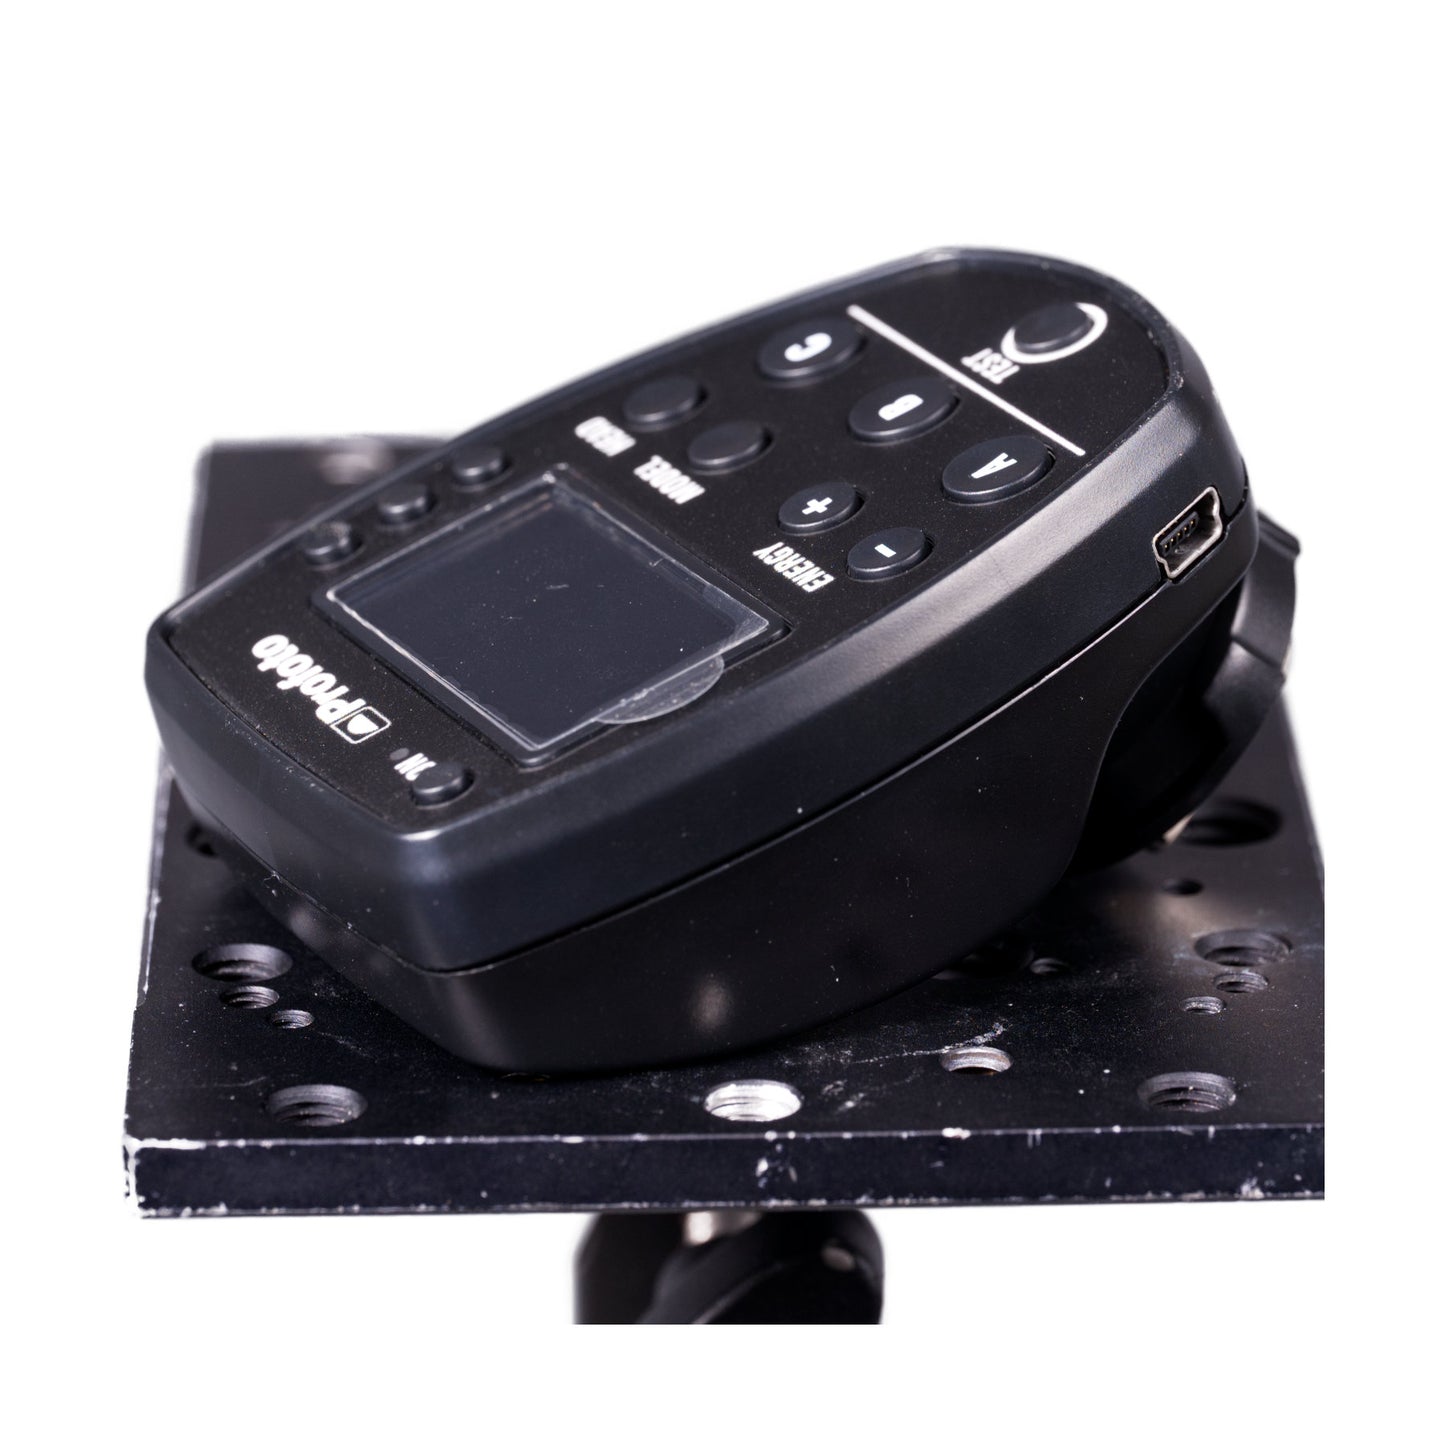 Buy Profoto Air Remote TTL-O (Olympus) - Ex Rental at Topic Store